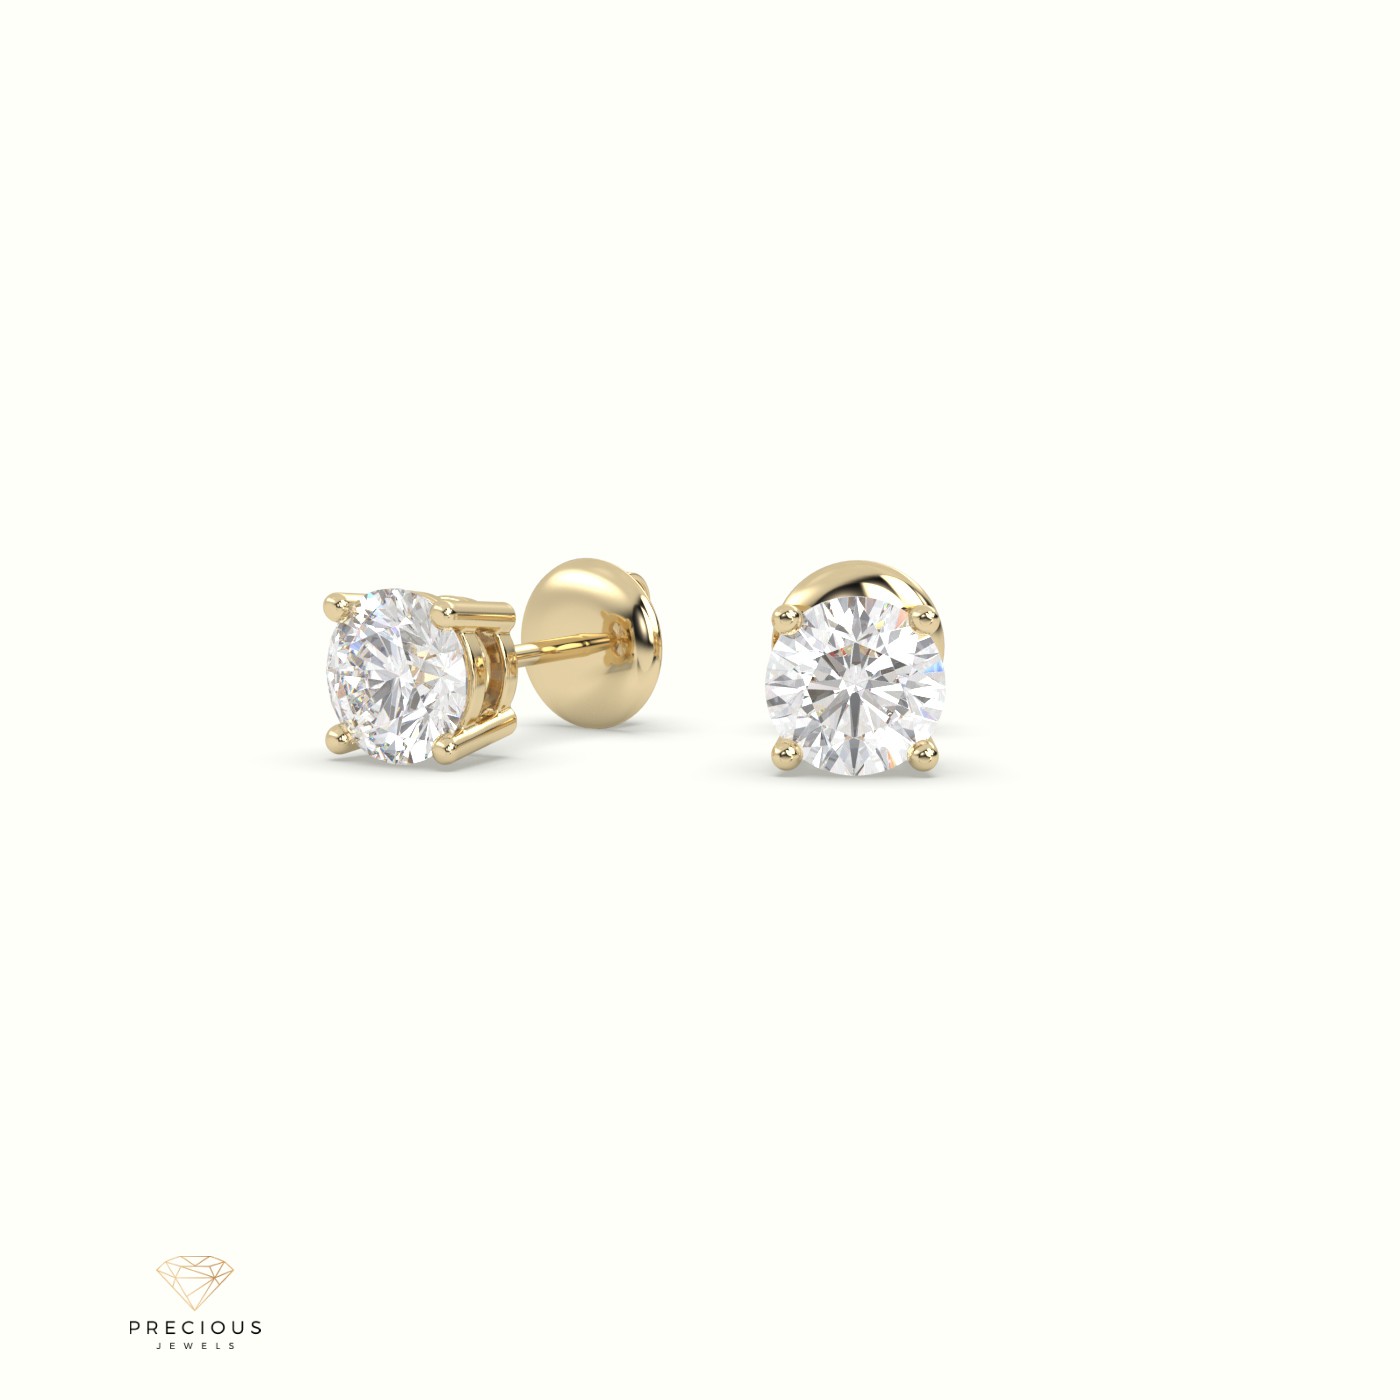 18k yellow gold 4 prongs classic round diamond earring studs